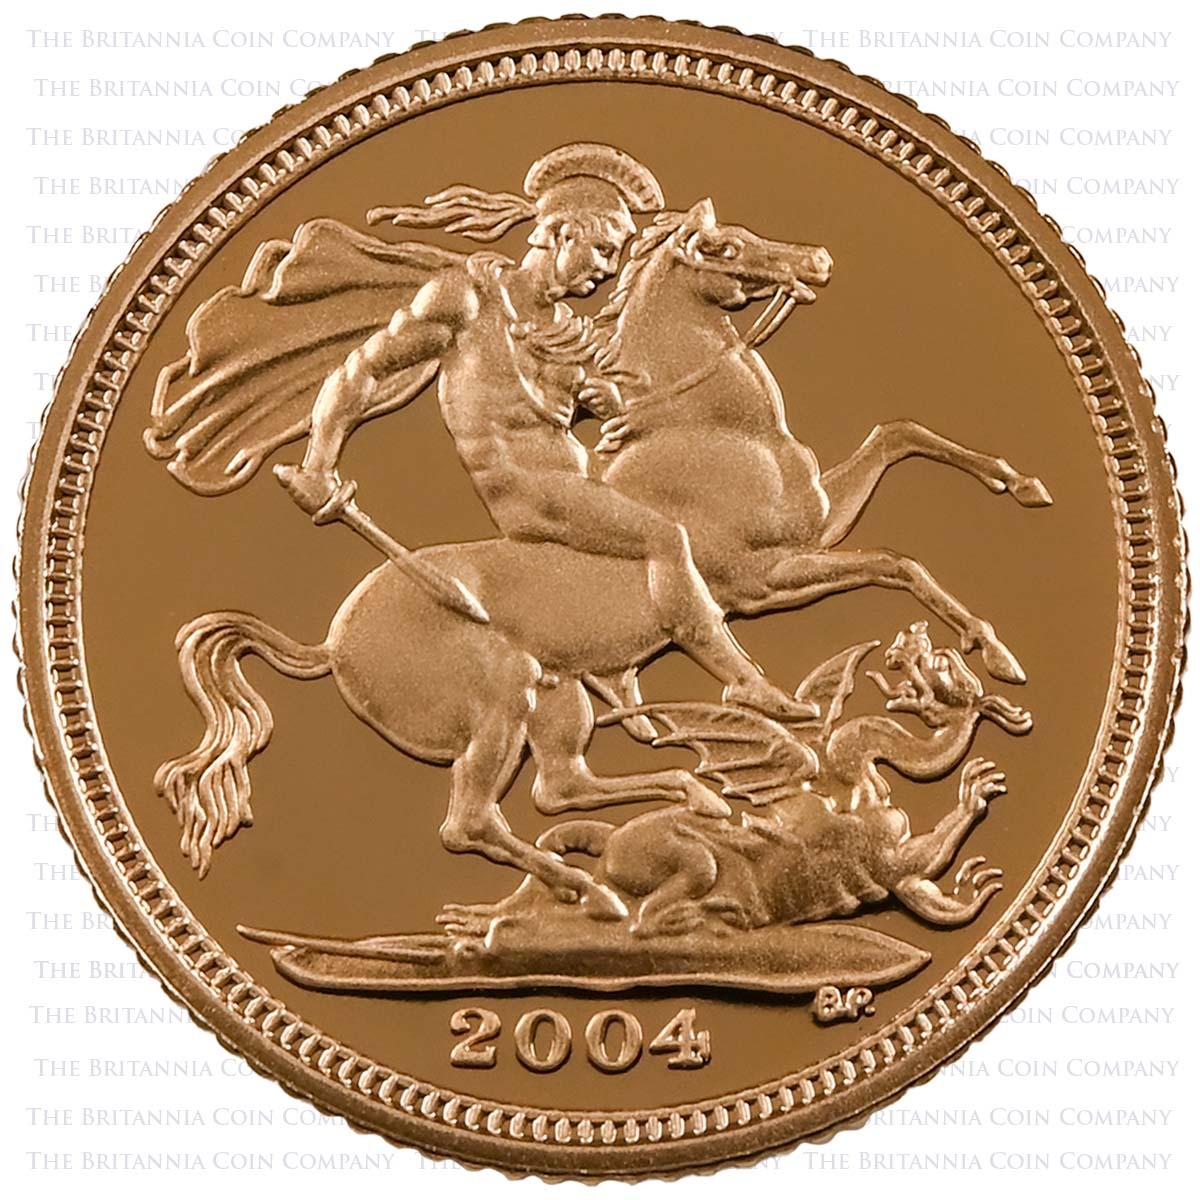 2004 Elizabeth II Gold Proof Half Sovereign Reverse